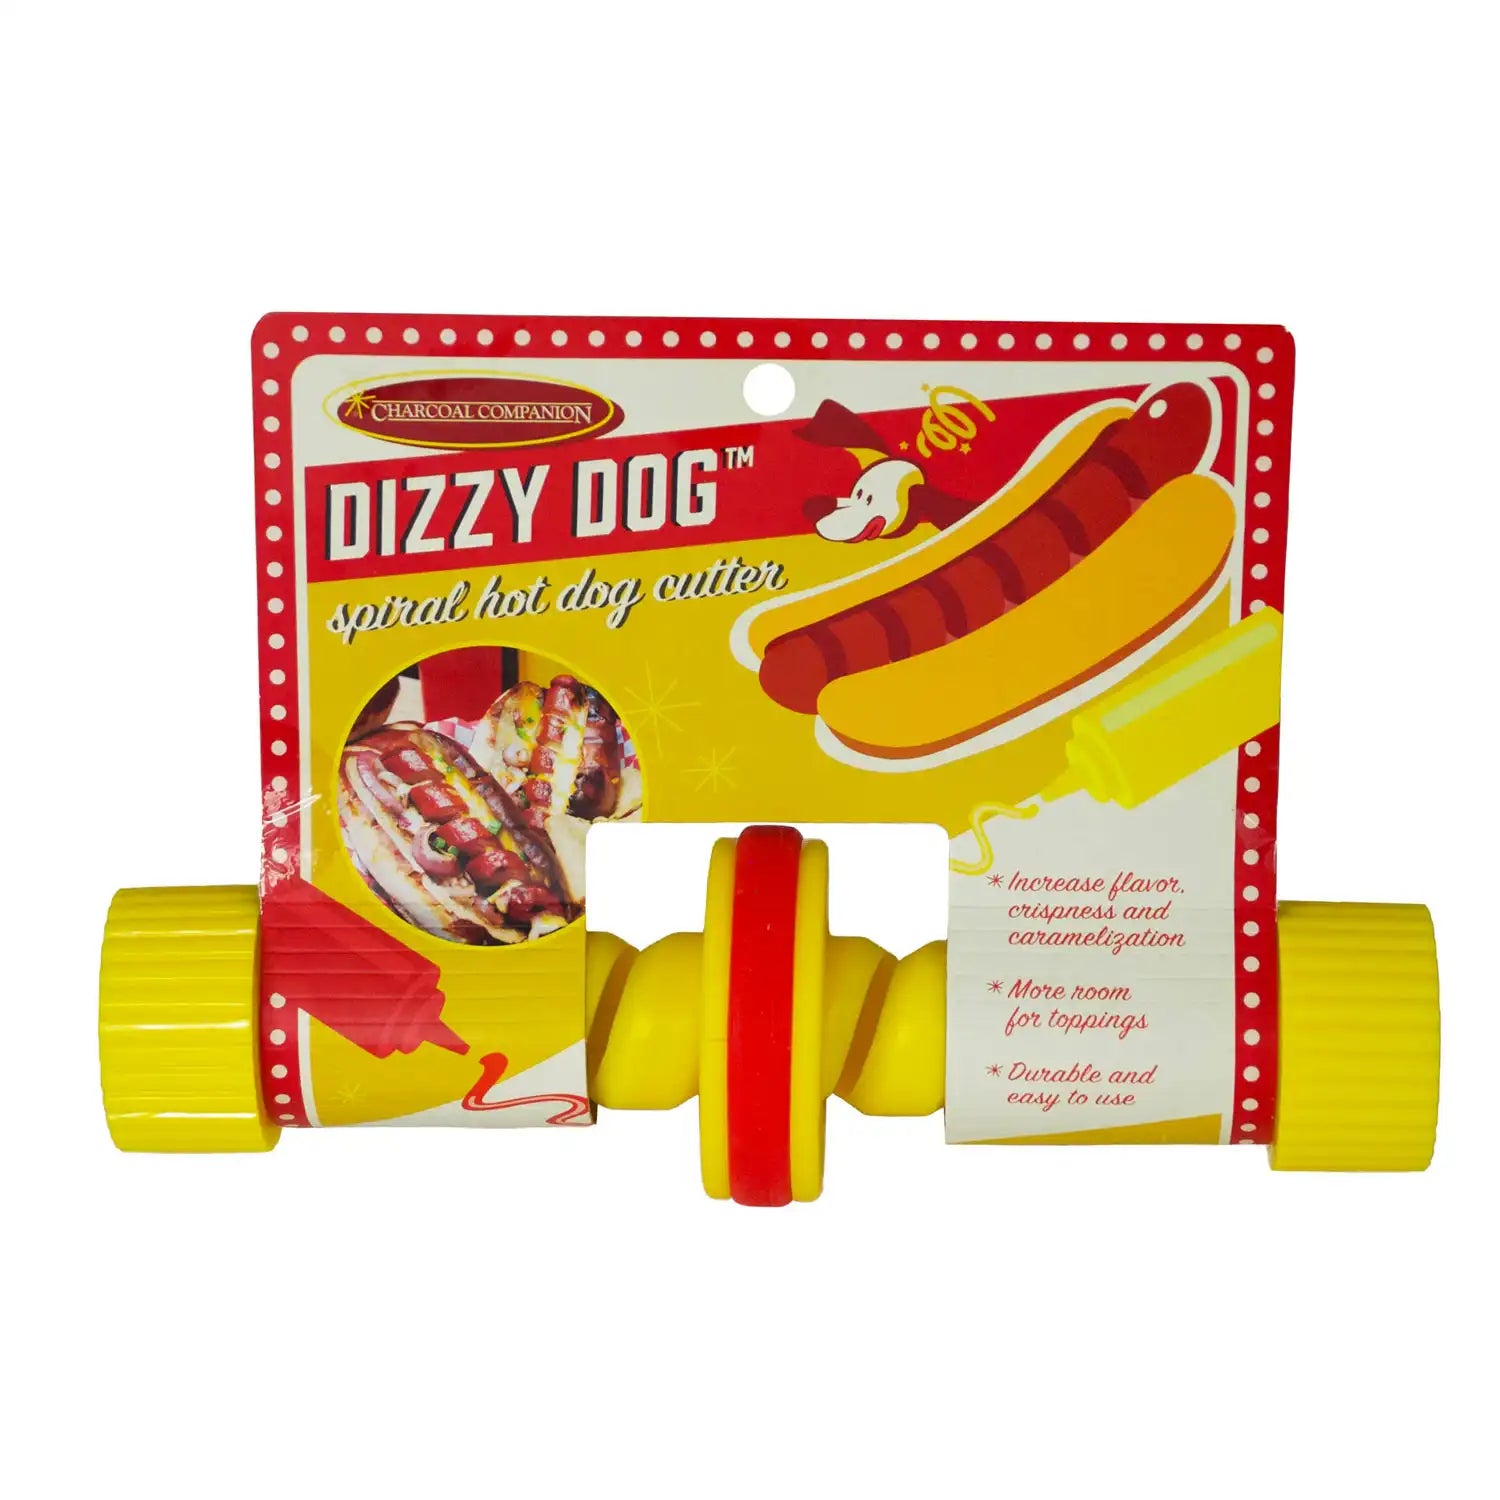 Charcoal Companion Dizzy Dog Spiral Hot Dog Cutter Kitchen Tools & Utensils 12042975